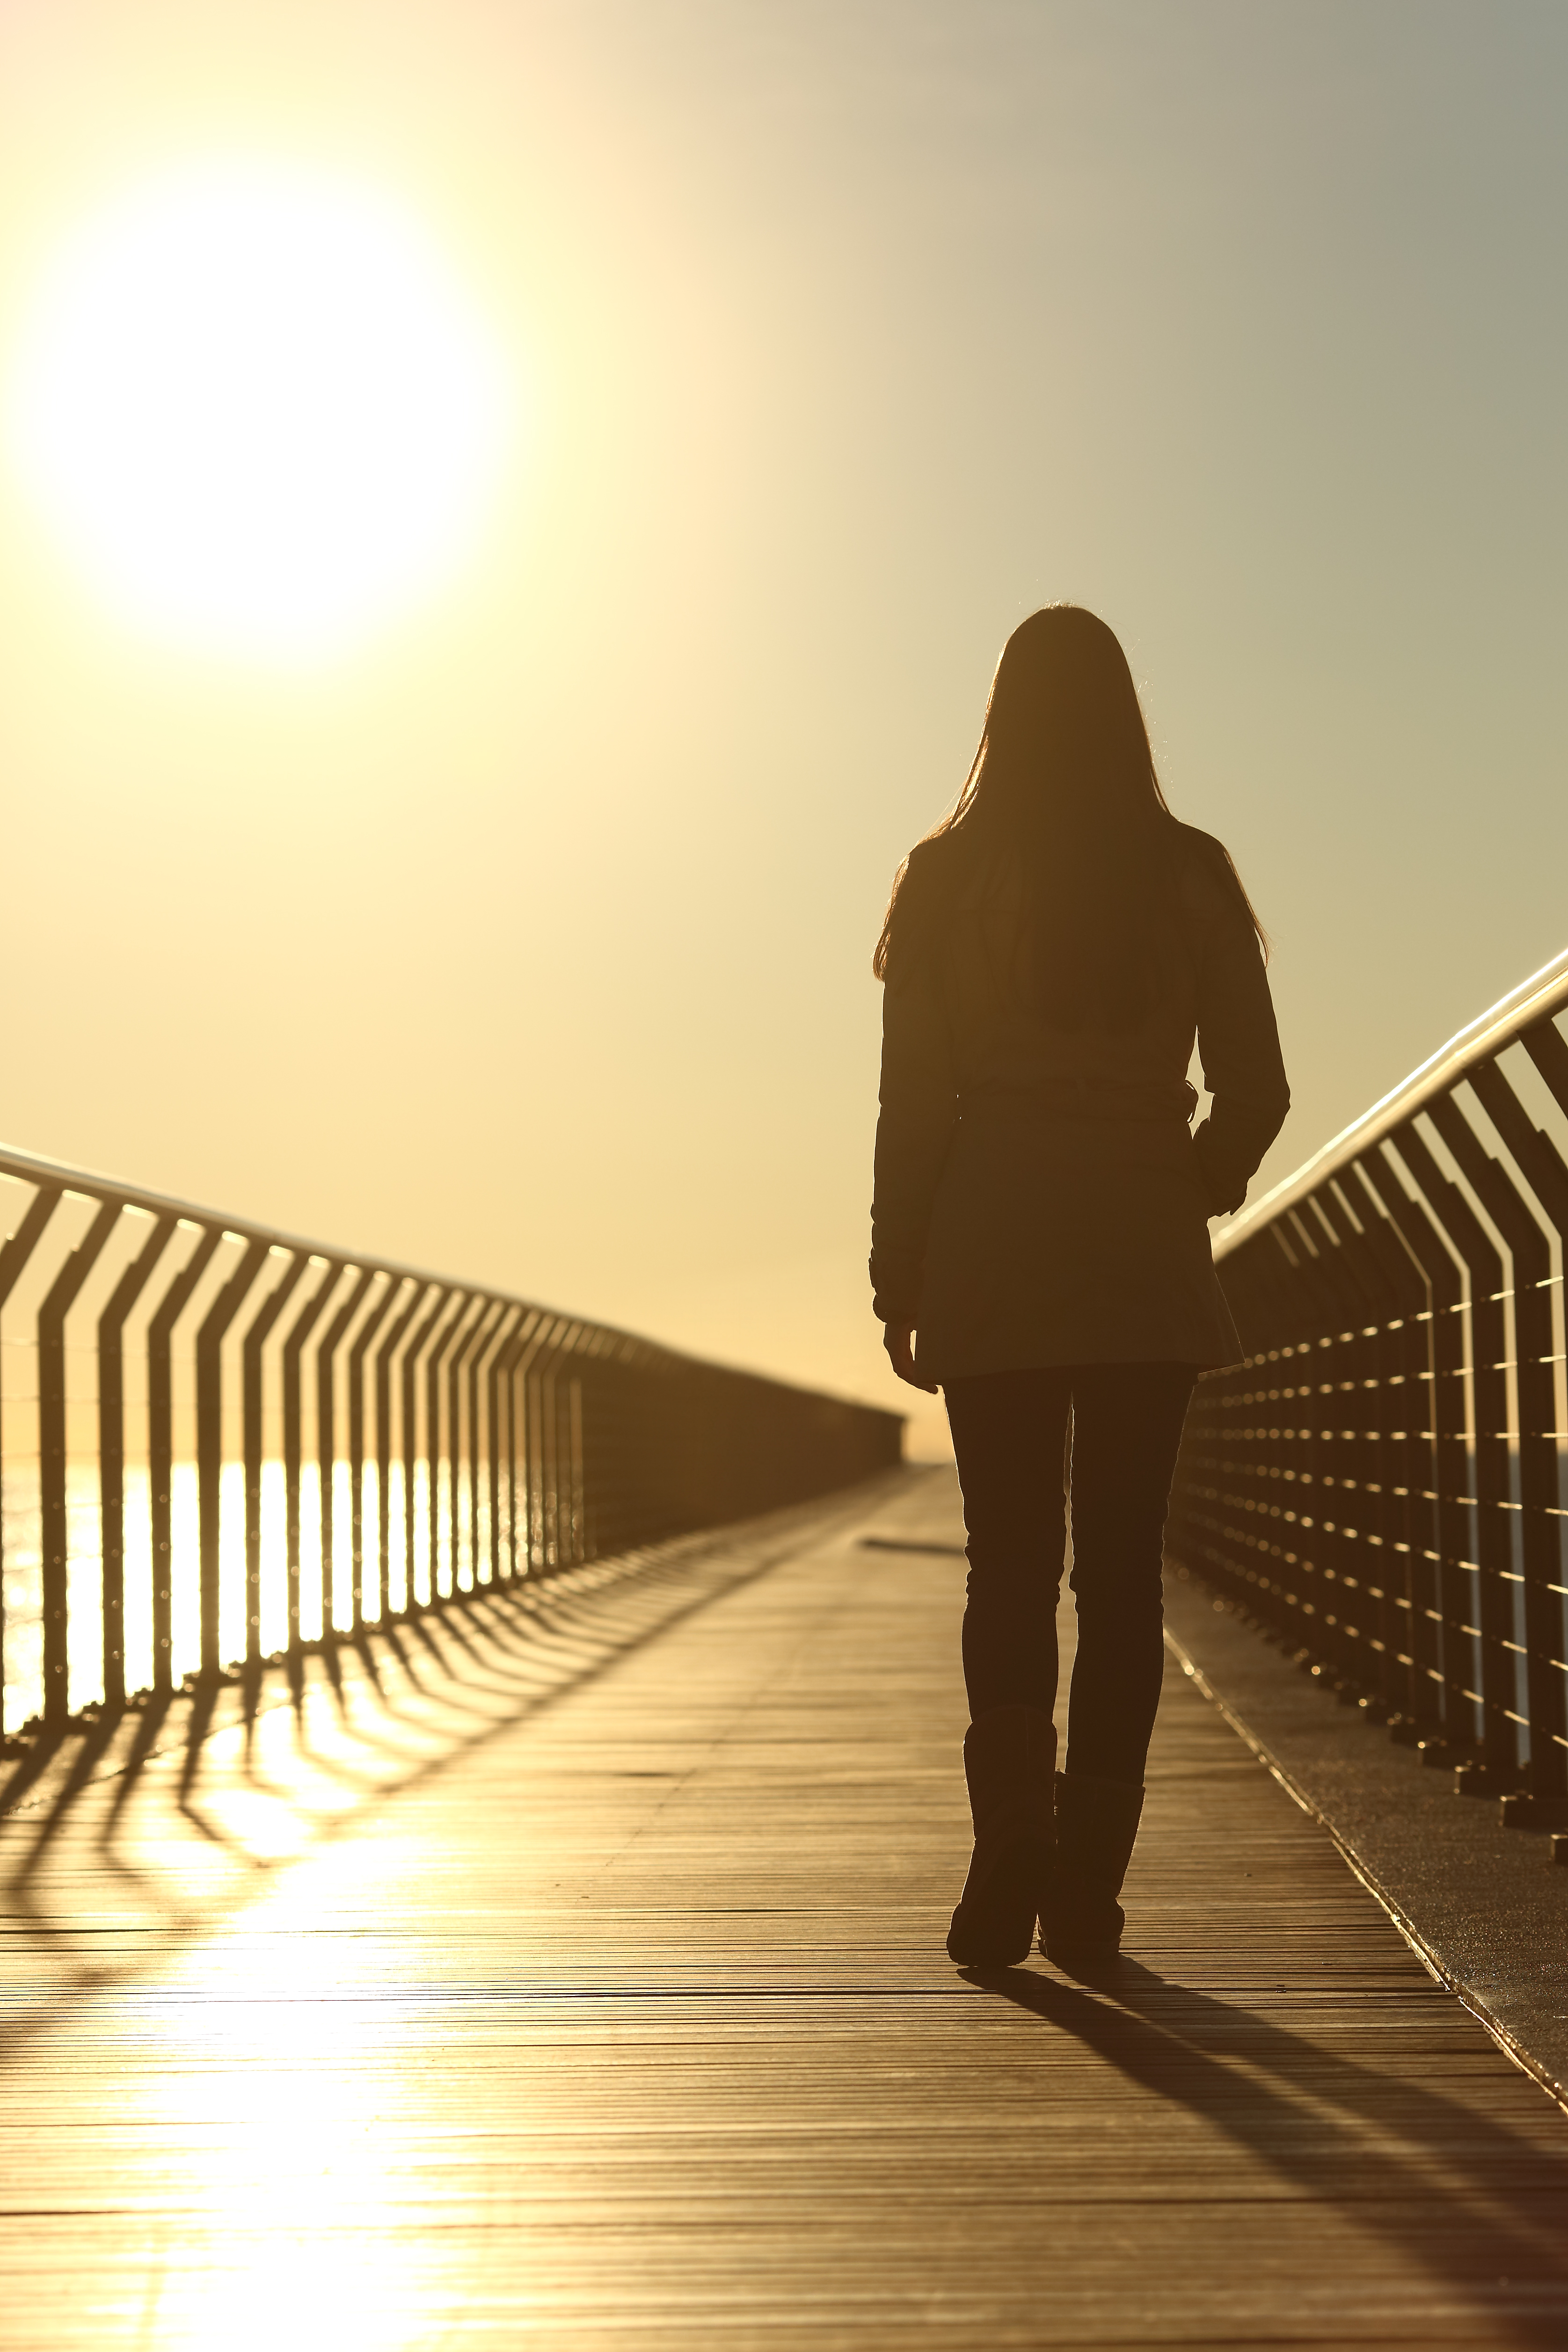 Sad woman silhouette walking alone at sunset